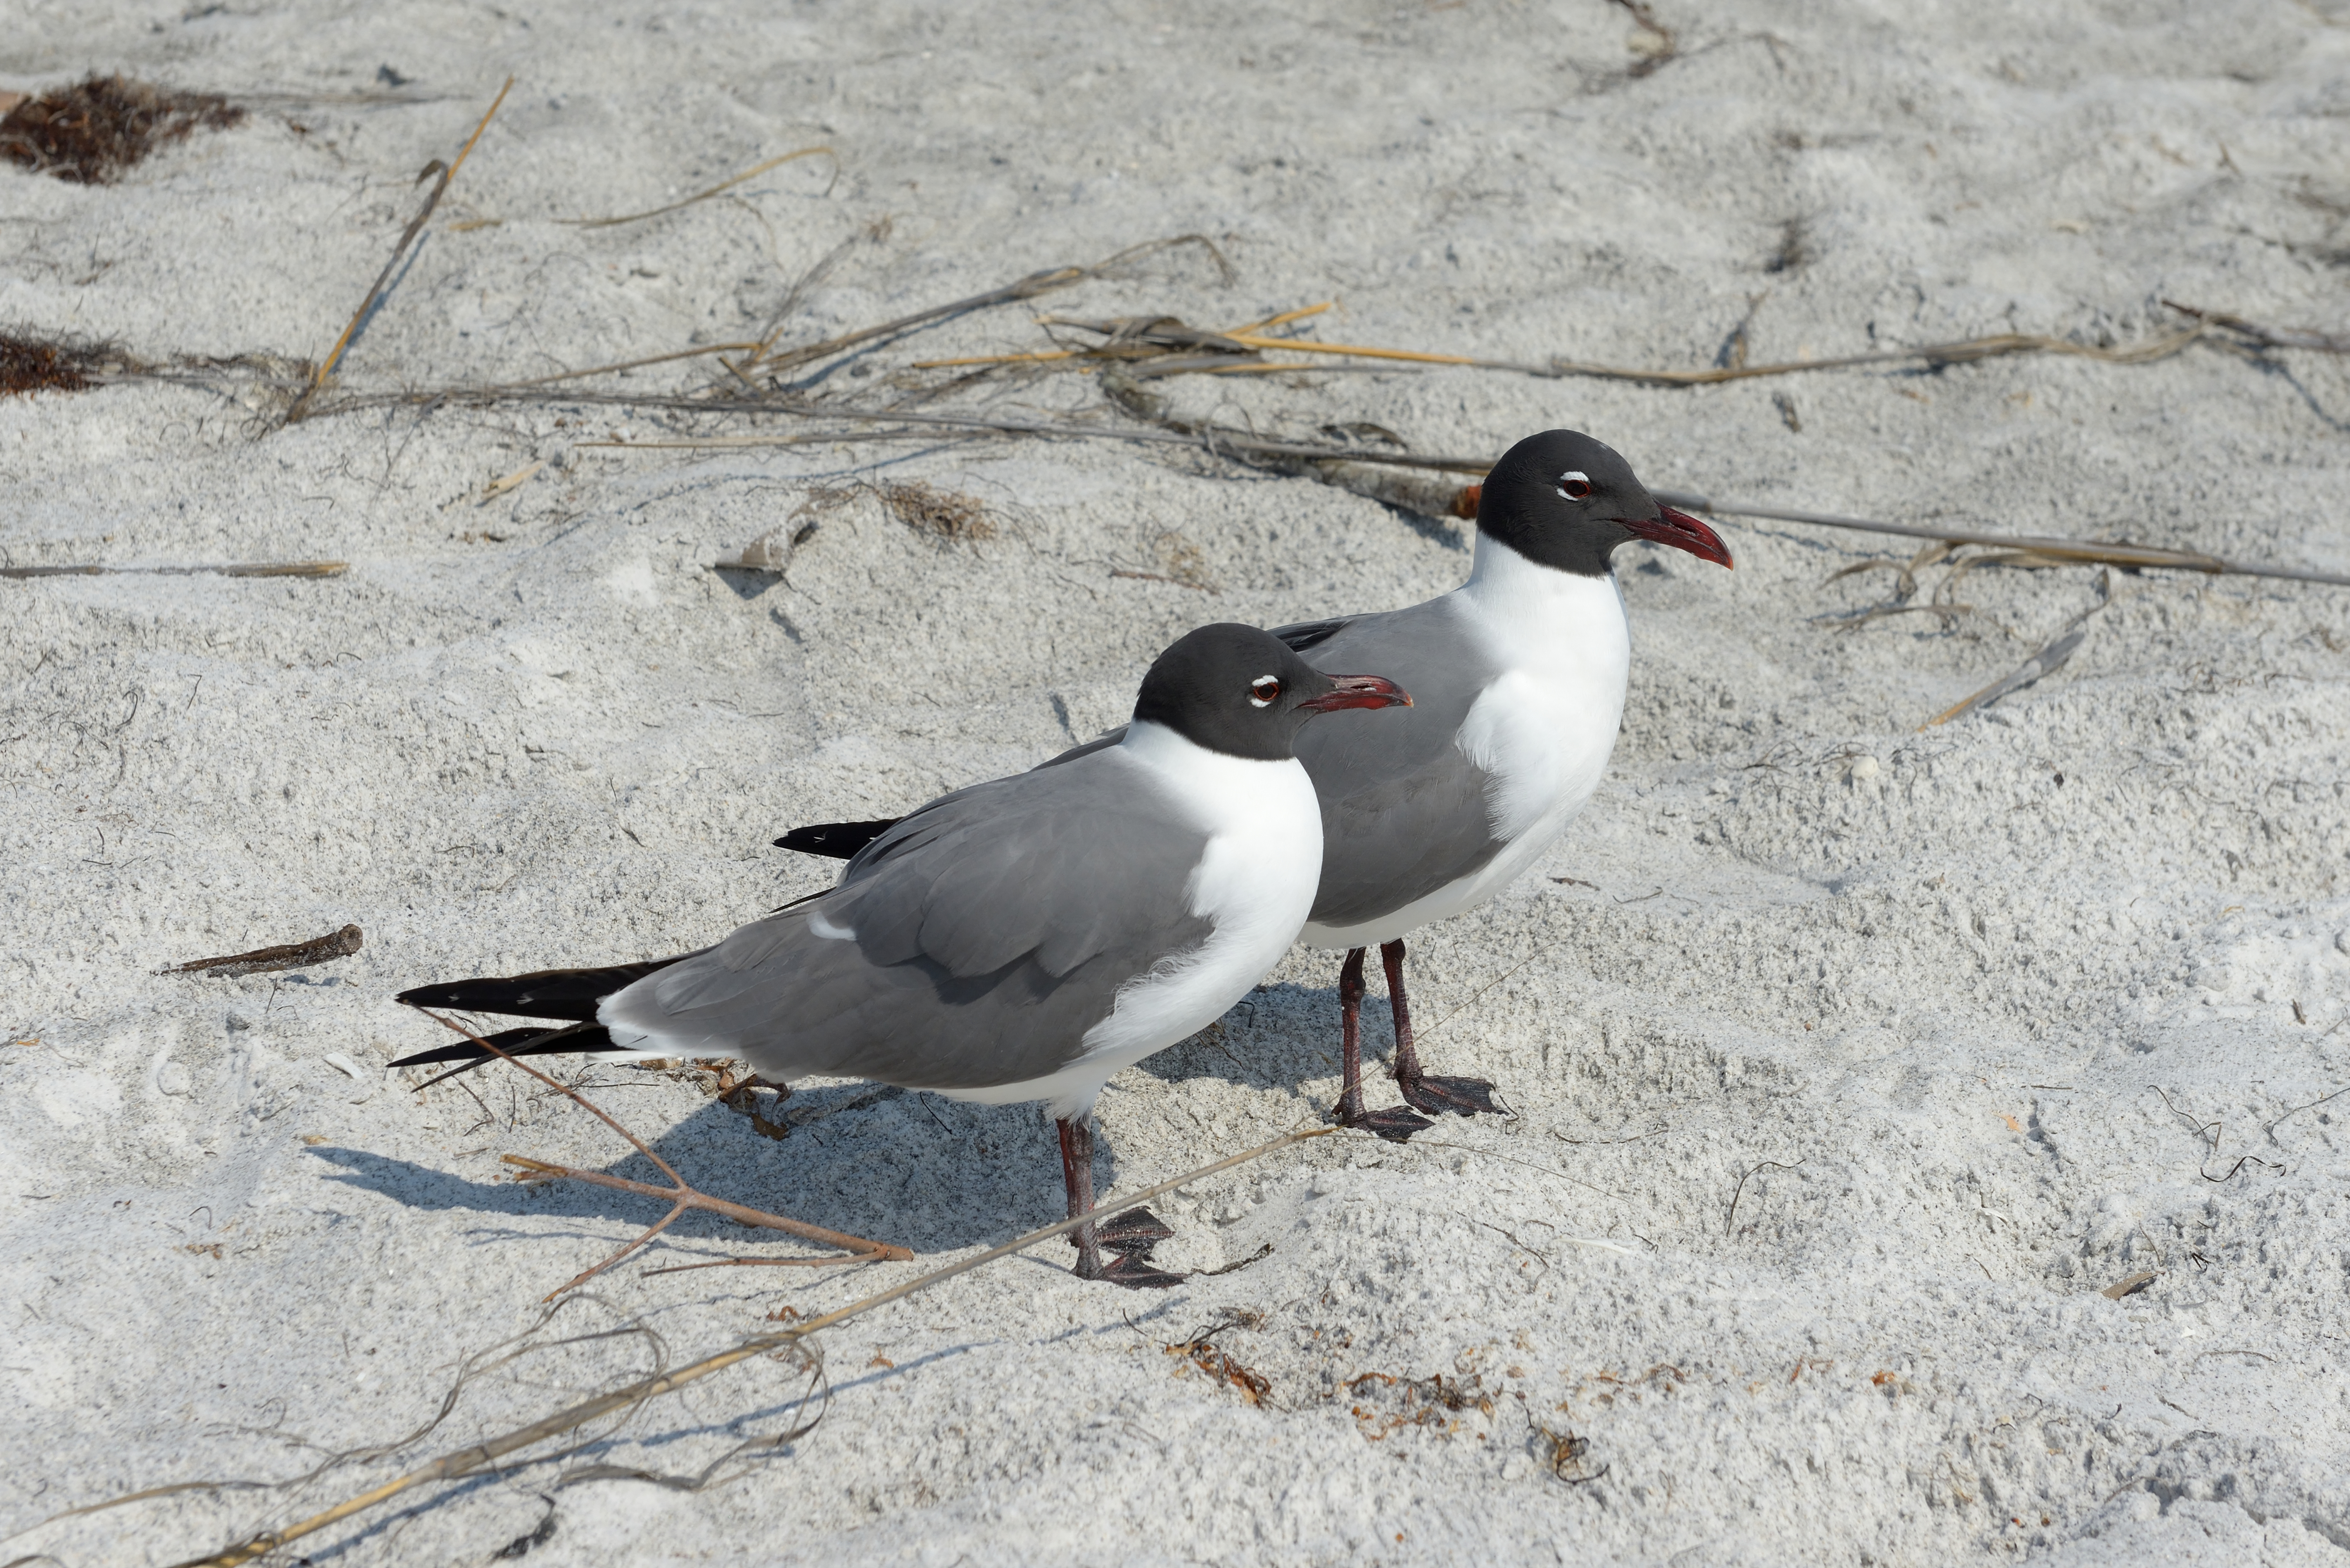 File:Florida seagulls 2 beach Longboat Key.jpg - Wikimedia Commons